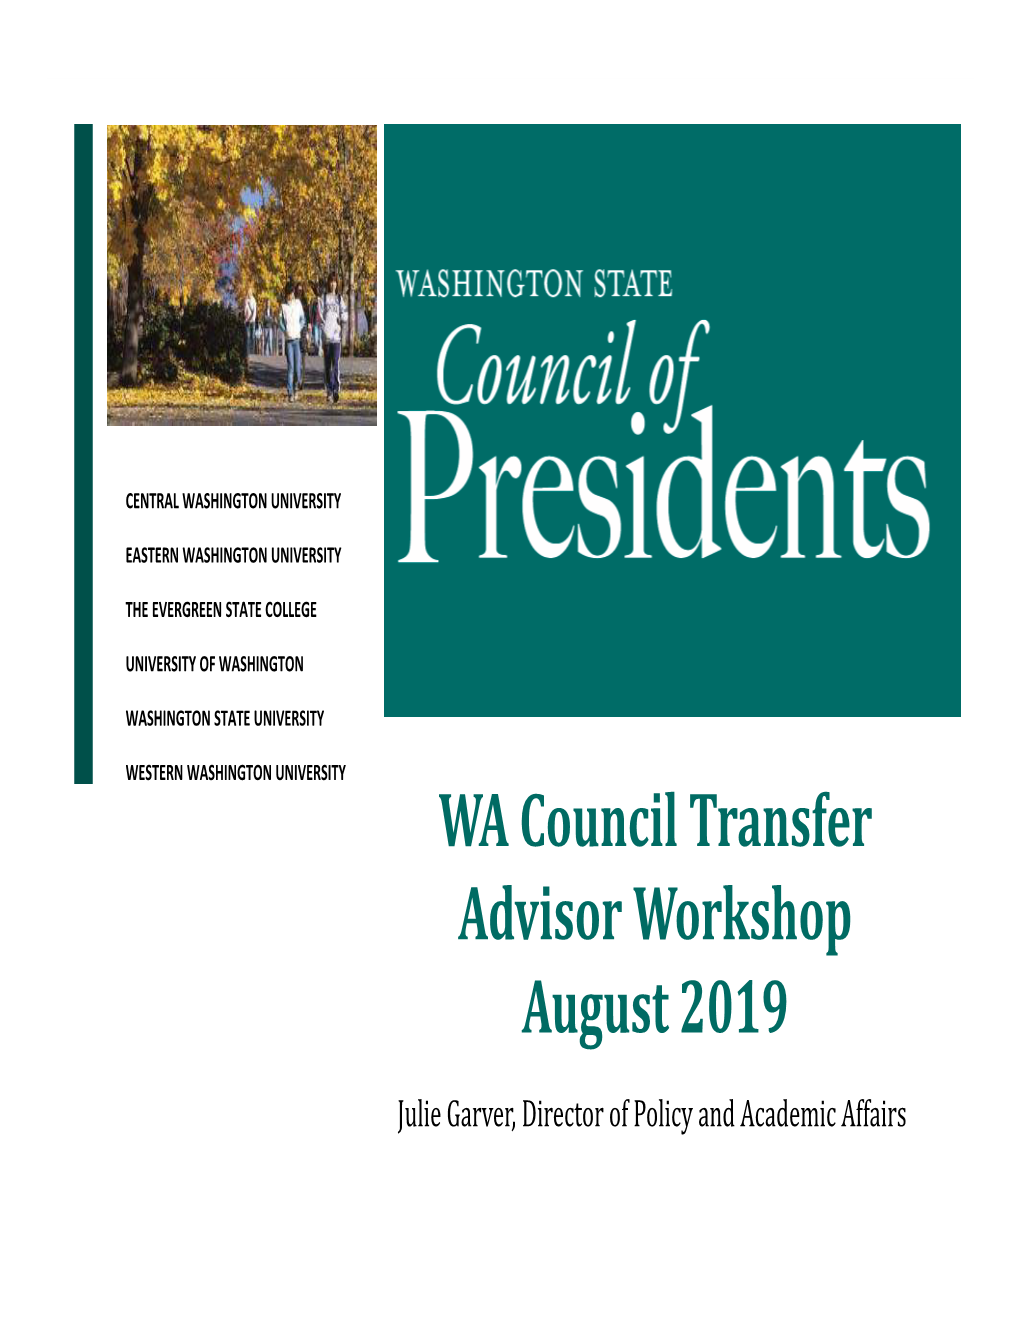 WA Council Transfer Advisor Workshop August 2019